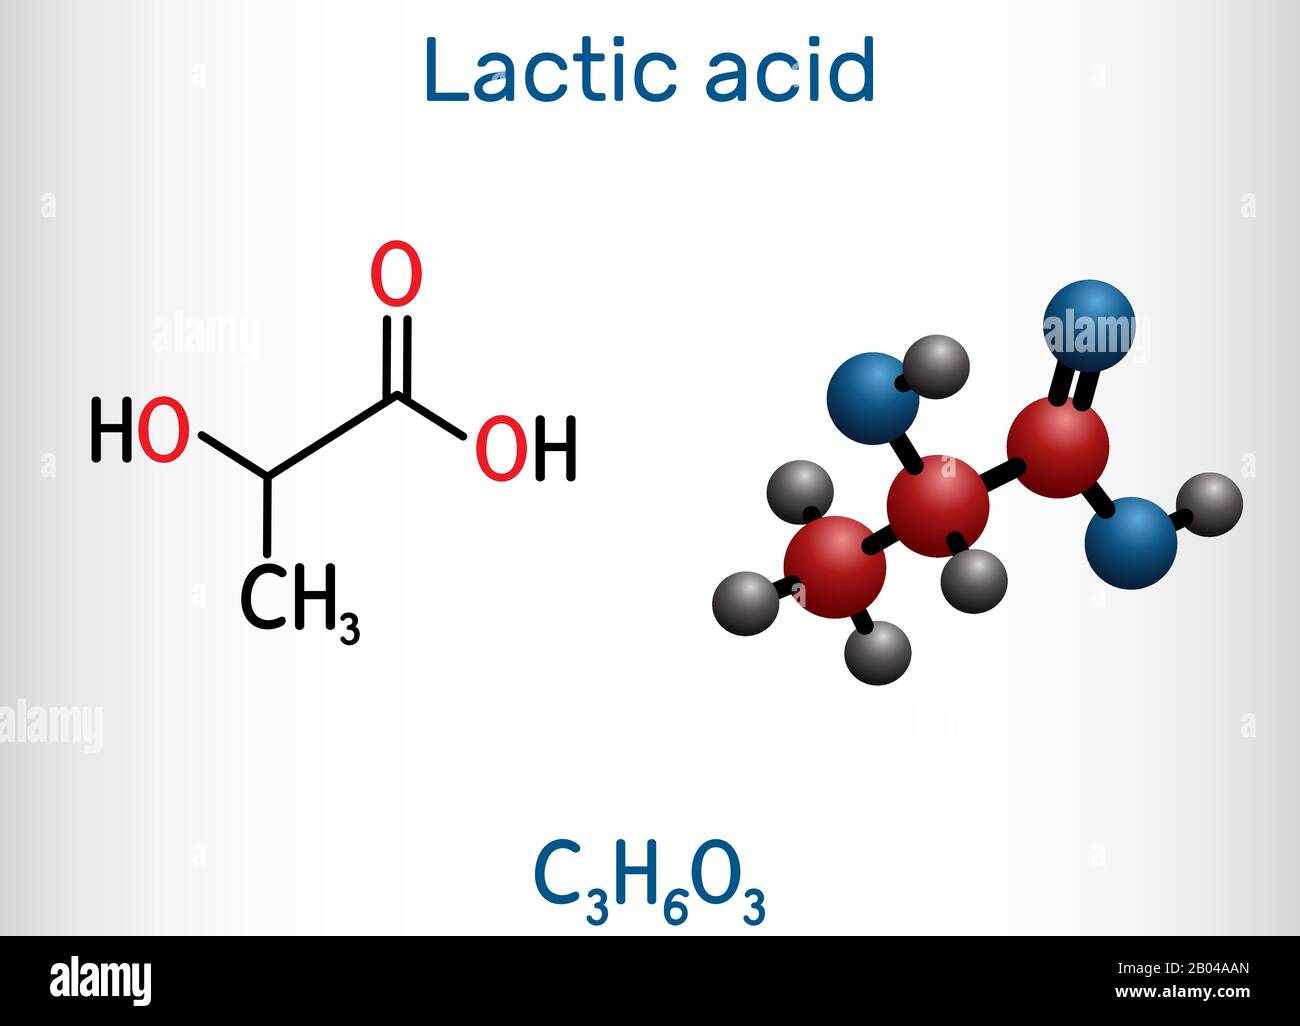 Lactic acid, lactate, milk sugar, C3H6O3 molecule. It is food additive E270 and alpha-hydroxy acid AHA.  Structural chemical formula and molecule mode Stock Vector